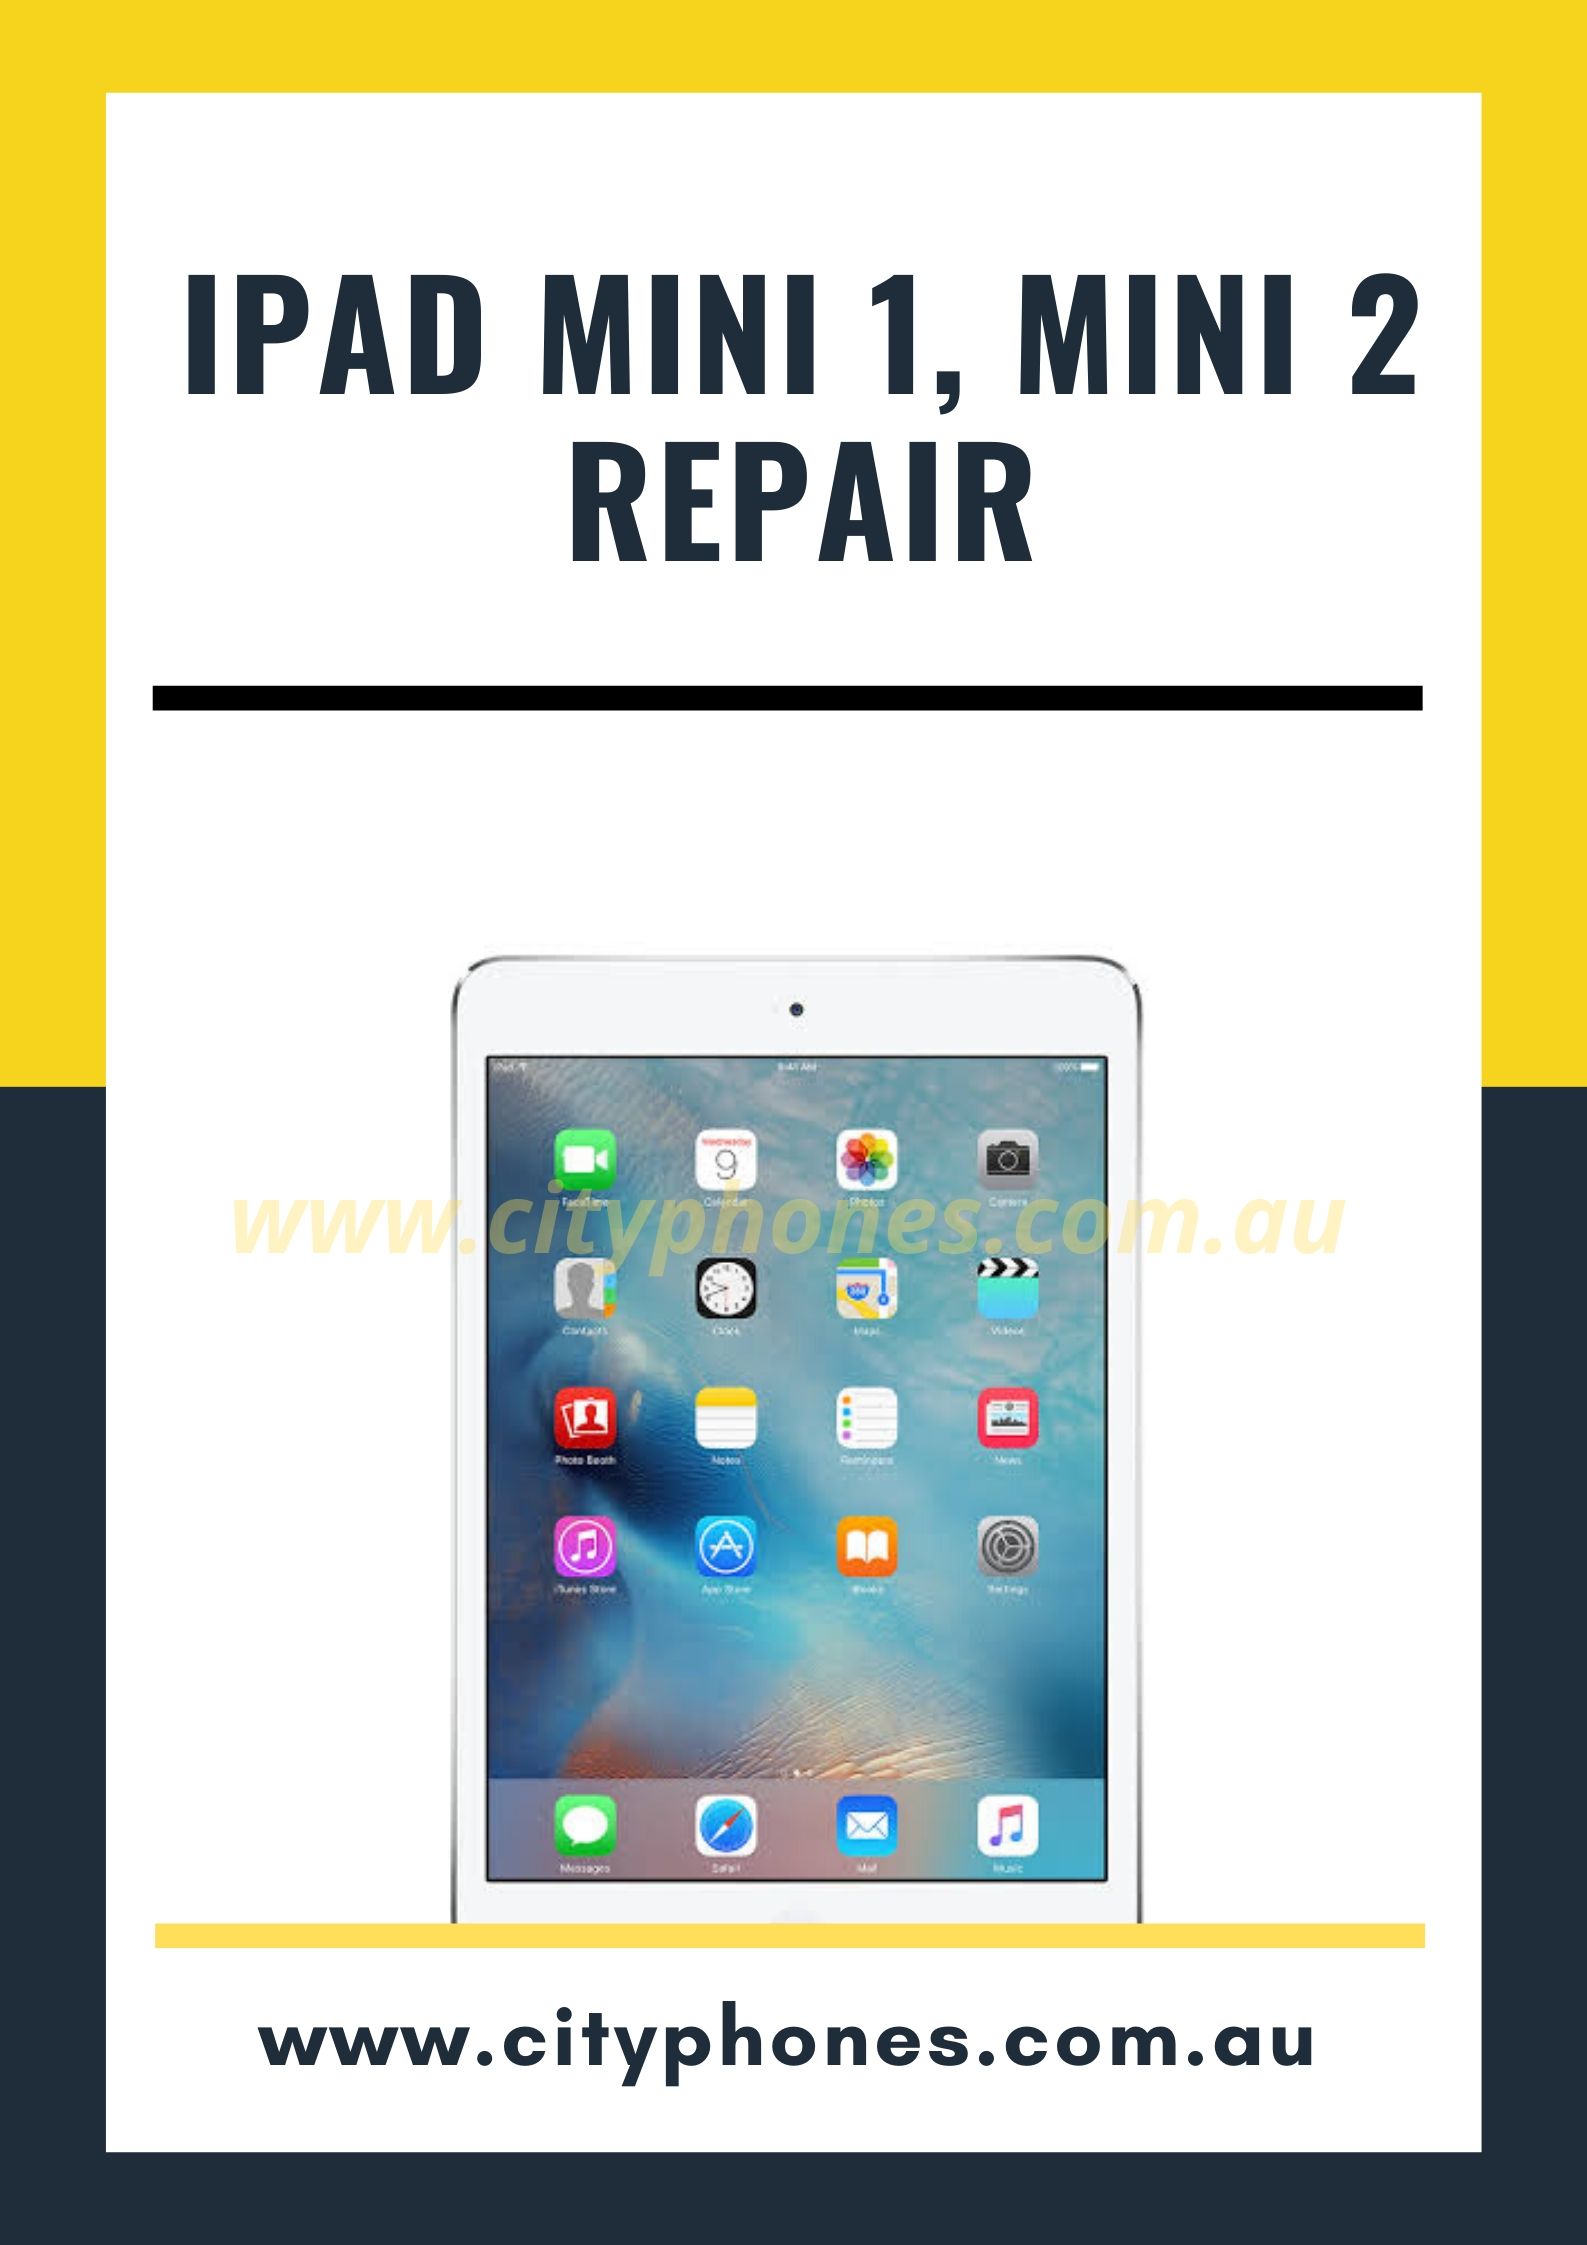 ipad mini screen repair in melbourne